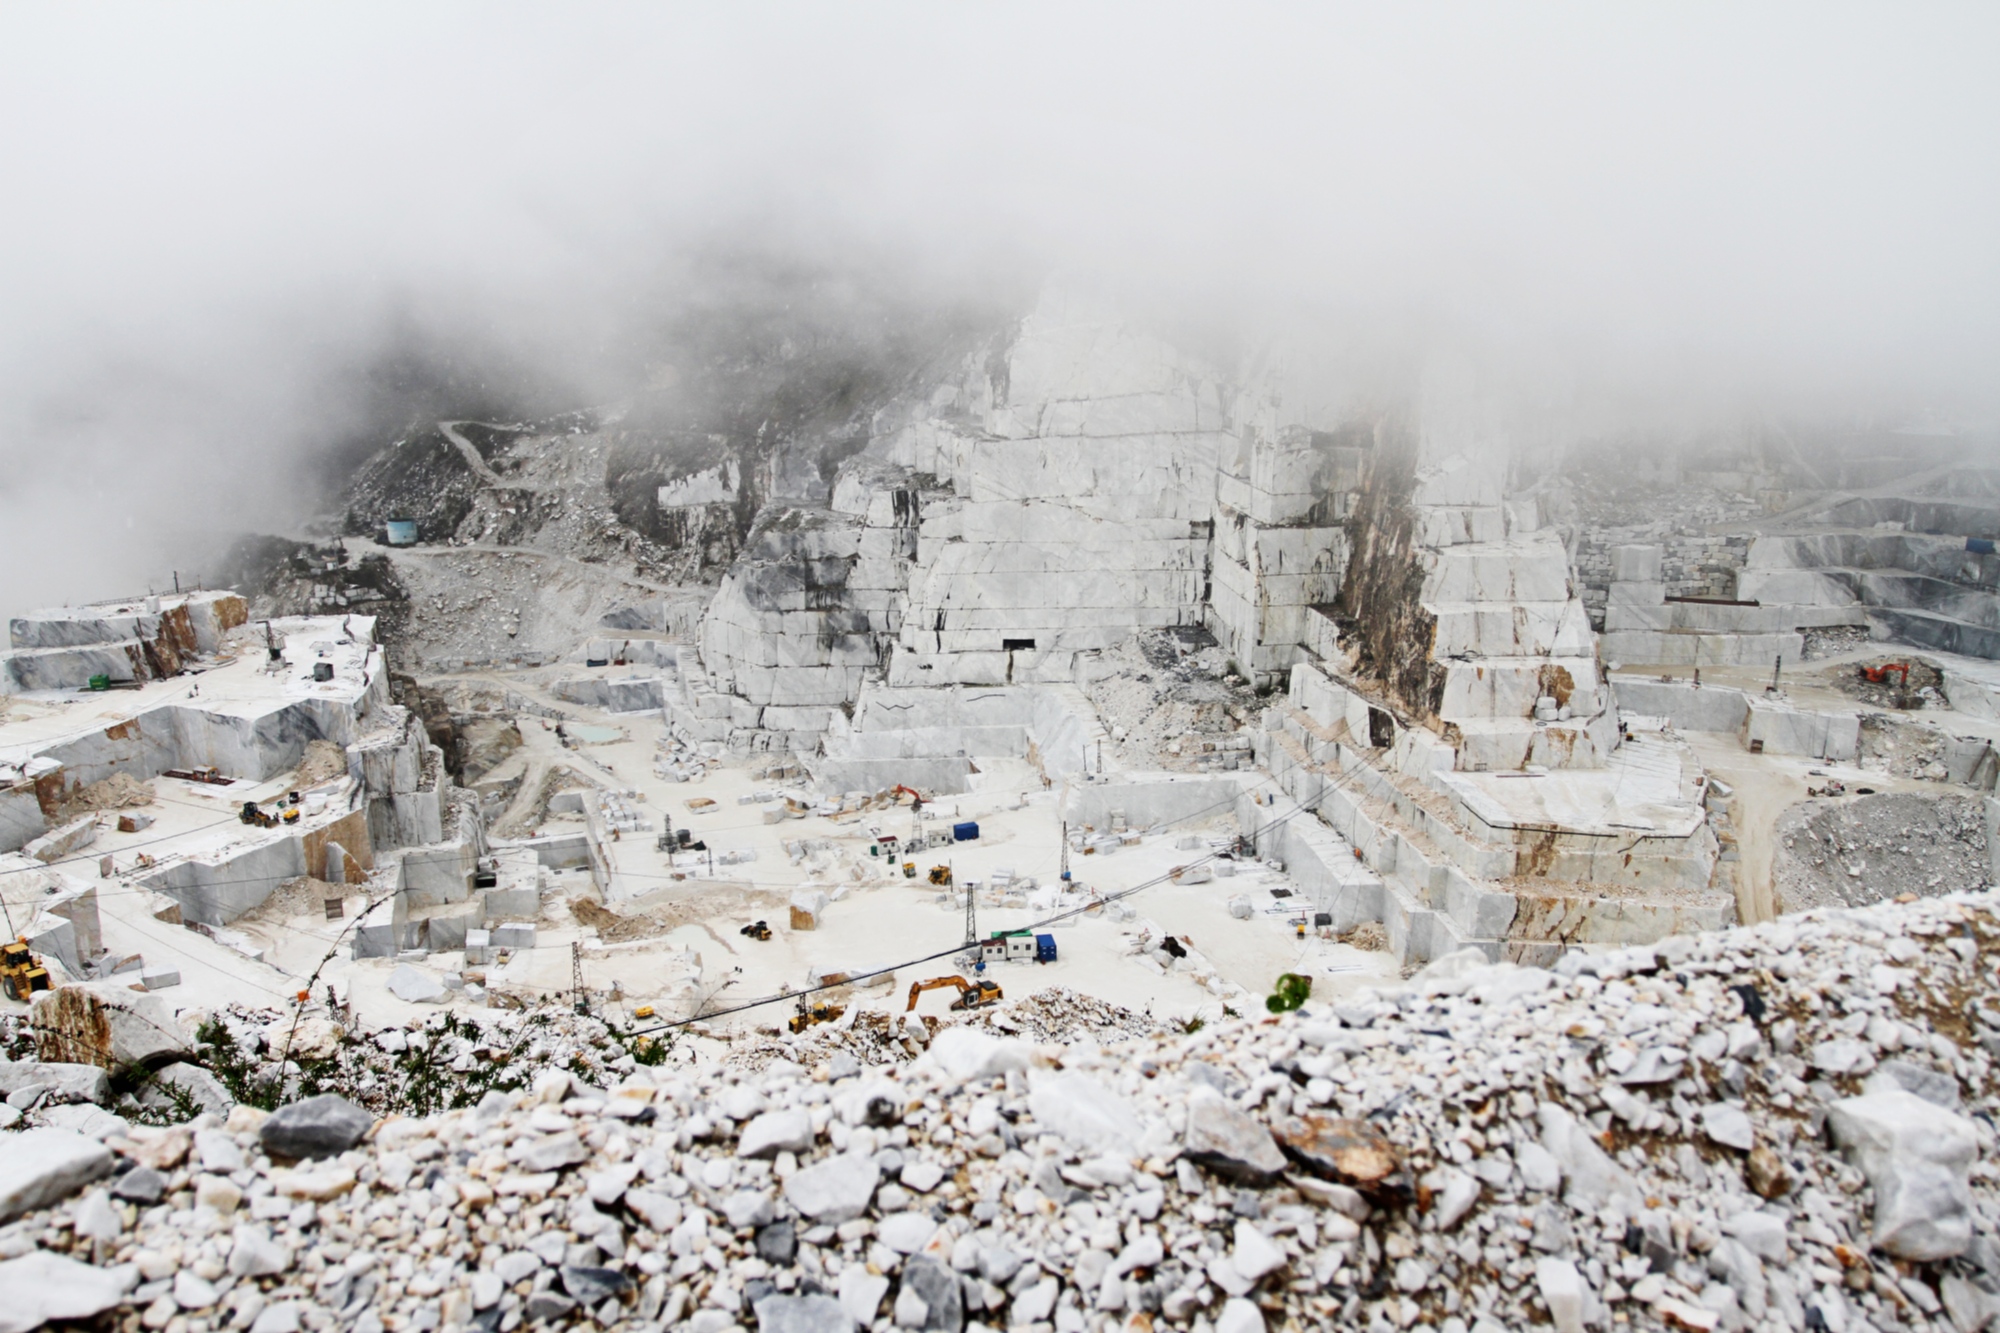 Marble quarries in Carrara